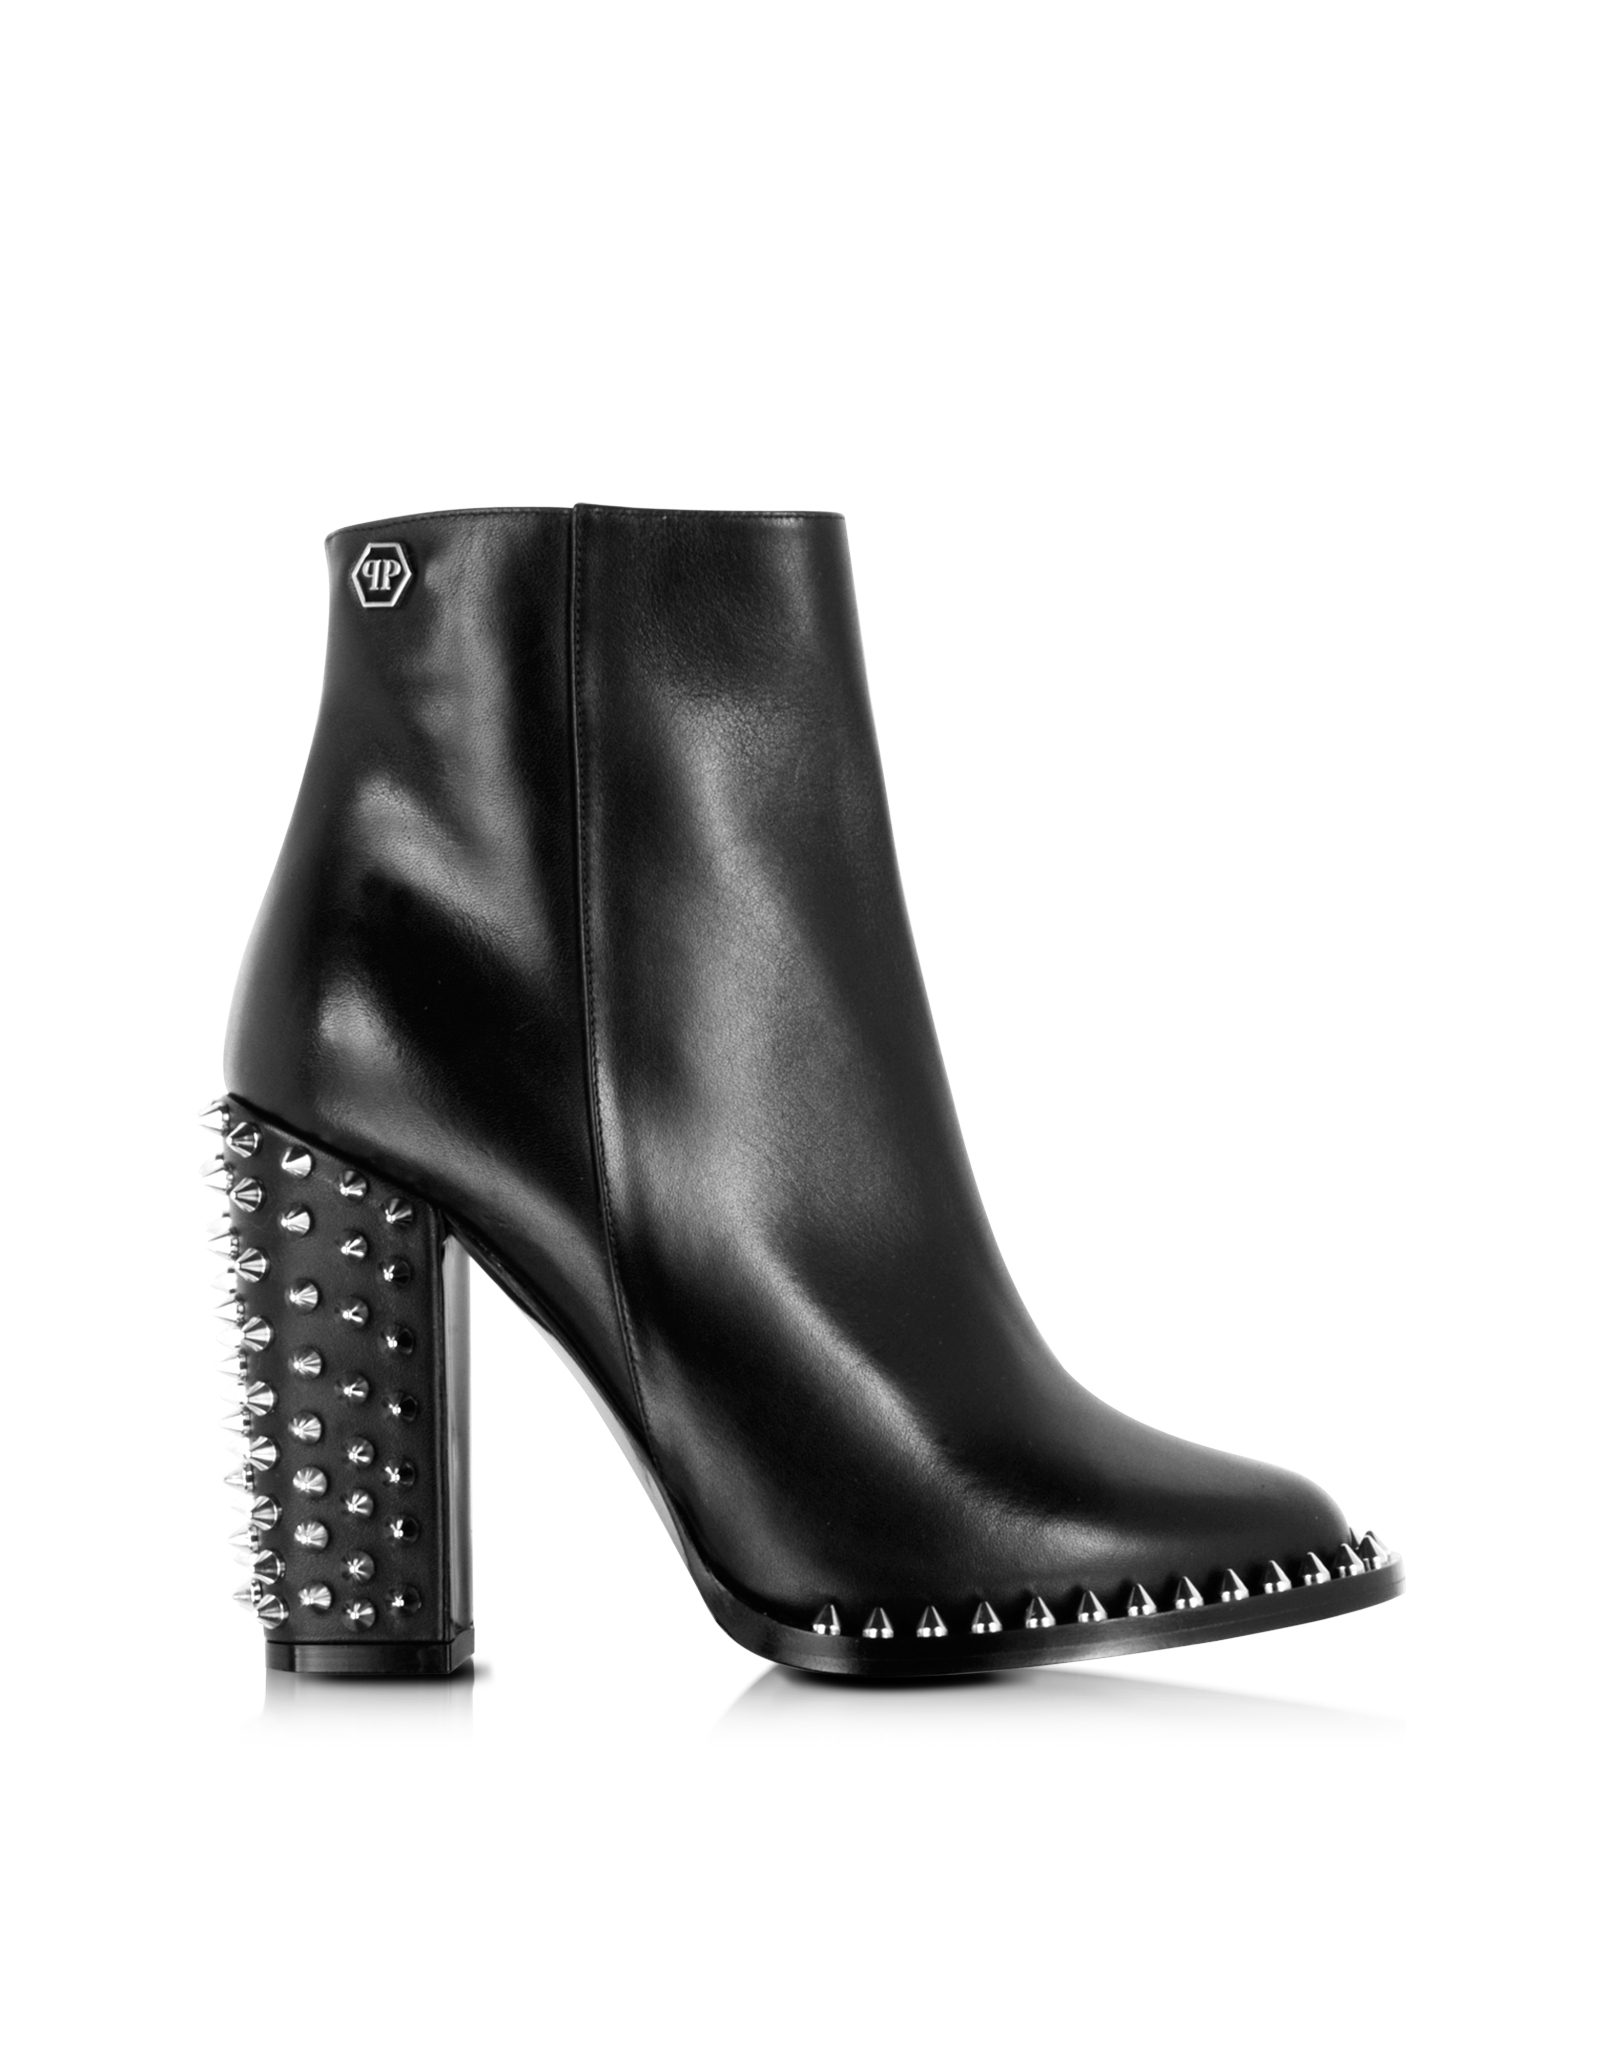 Philipp plein Shine Black Leather Low Boot W/studs in Black | Lyst